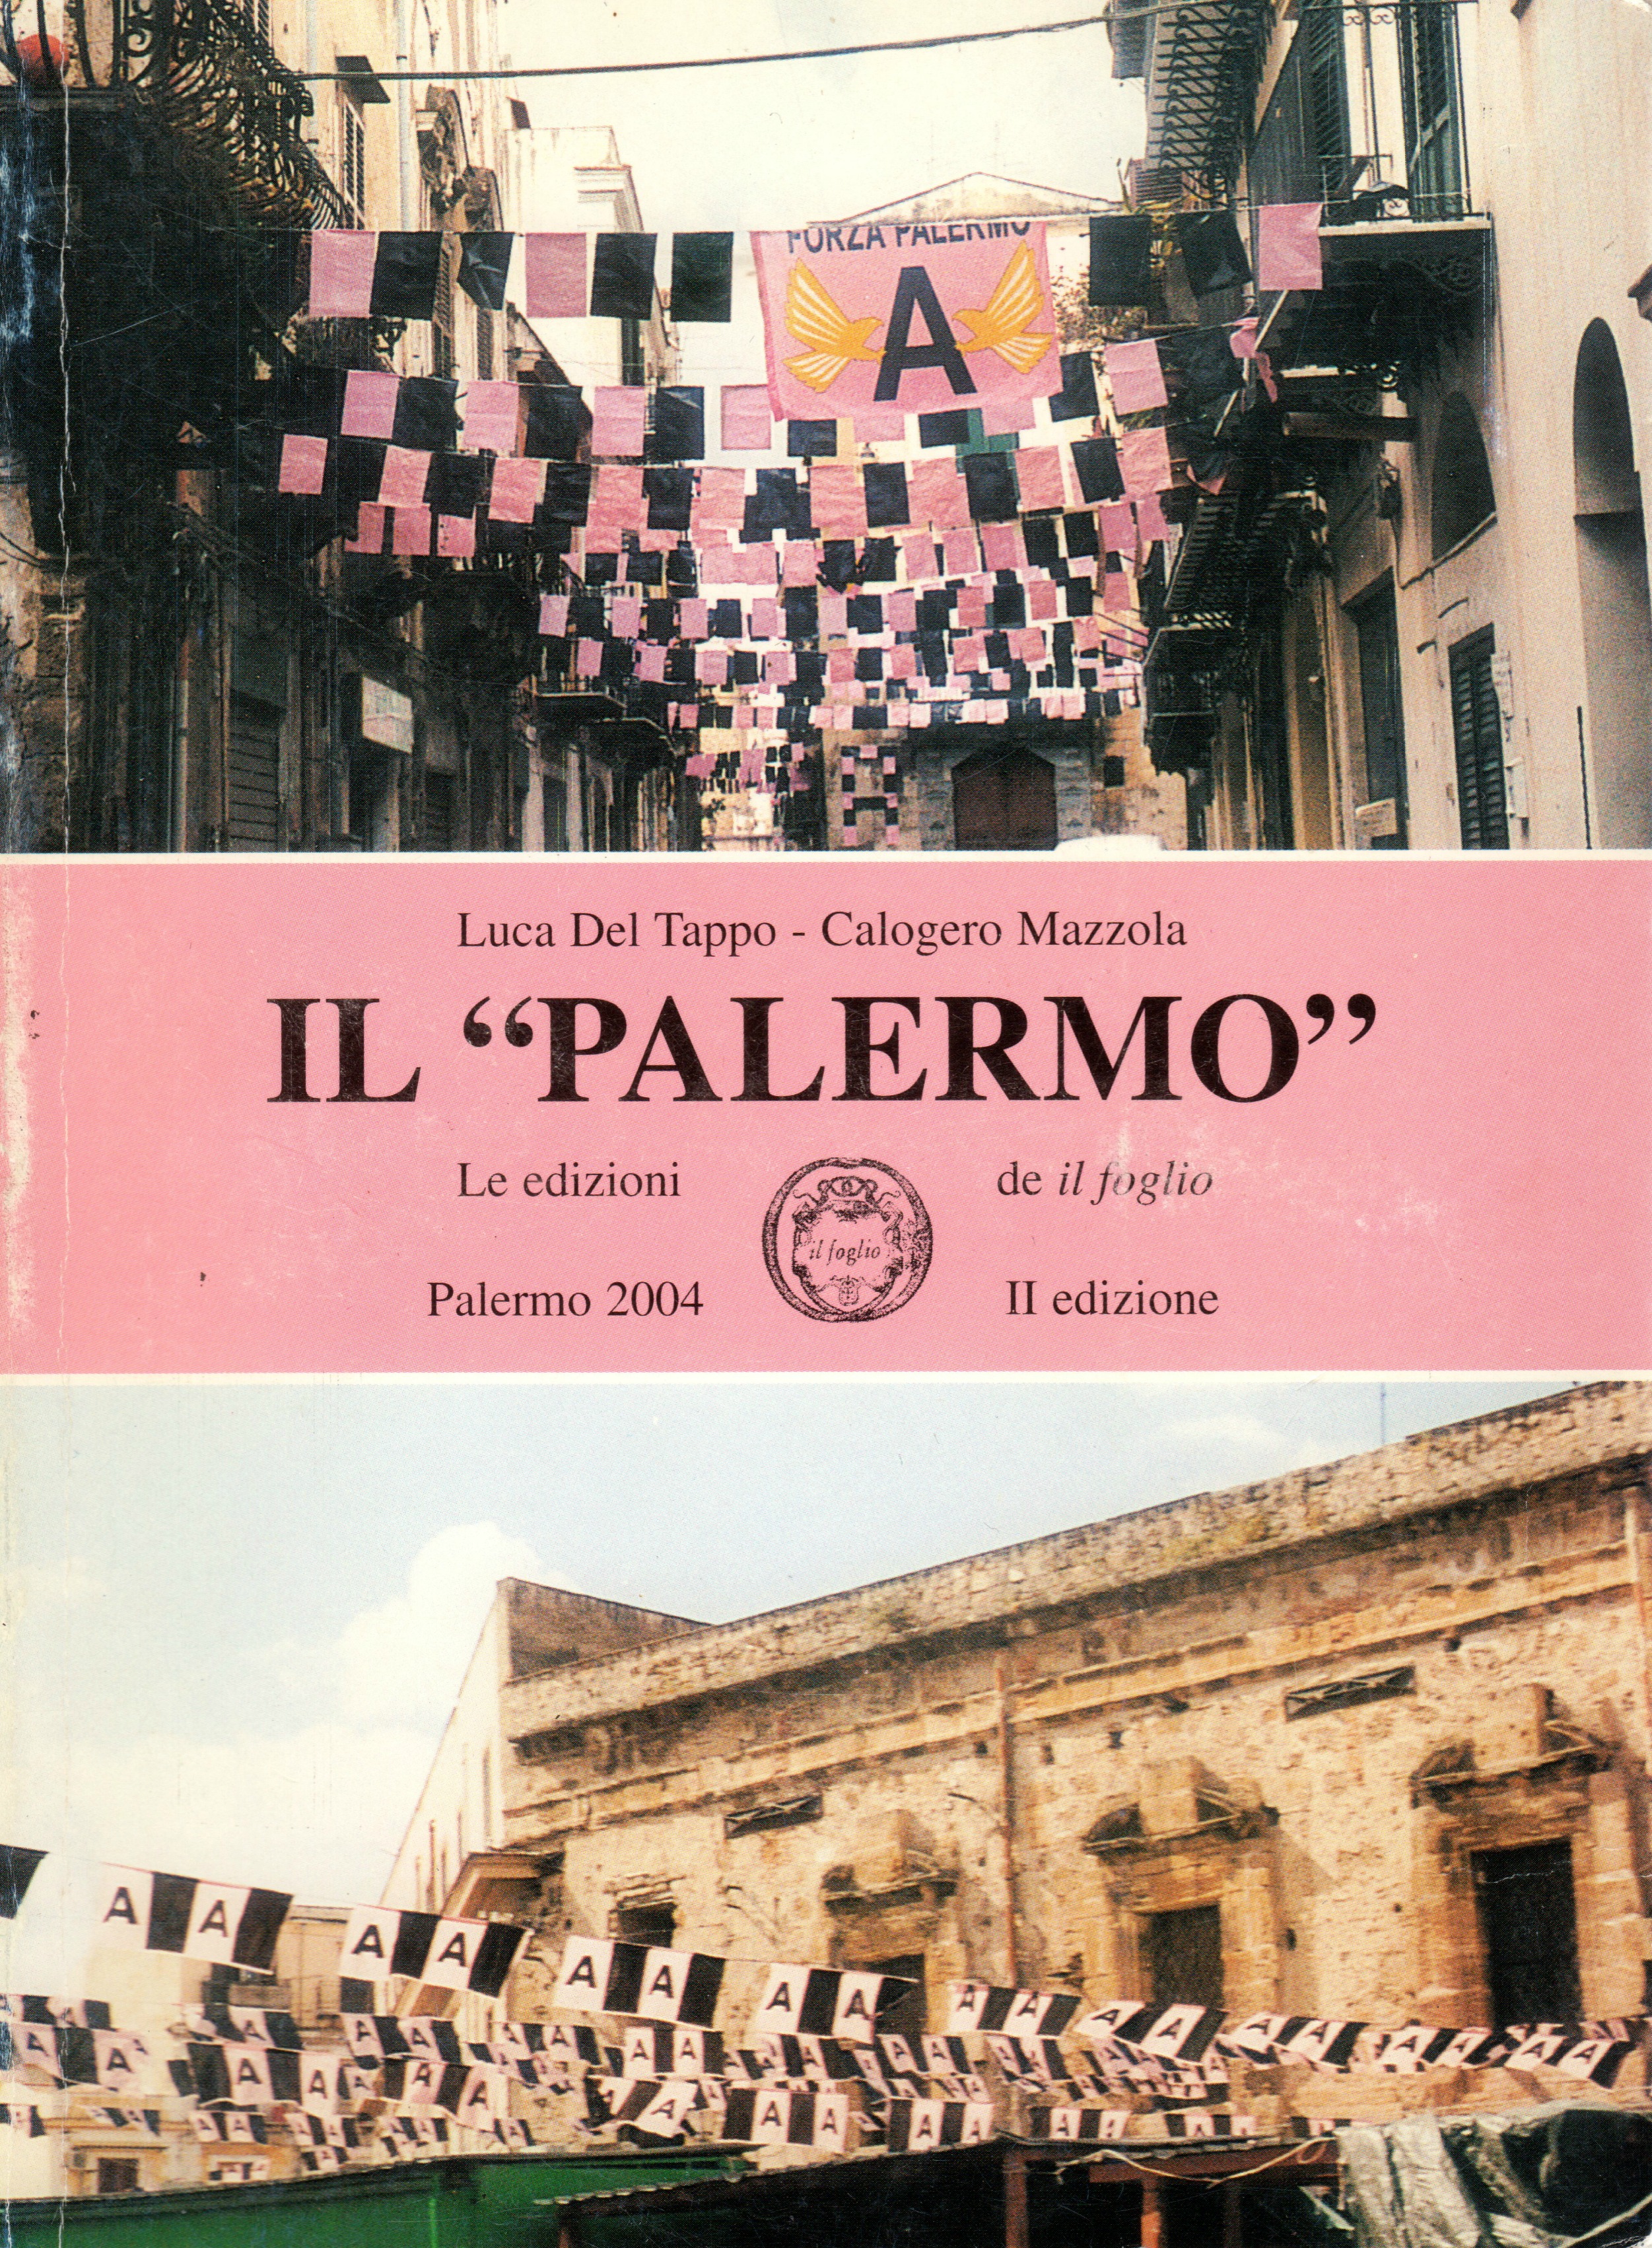 Palermo 2004